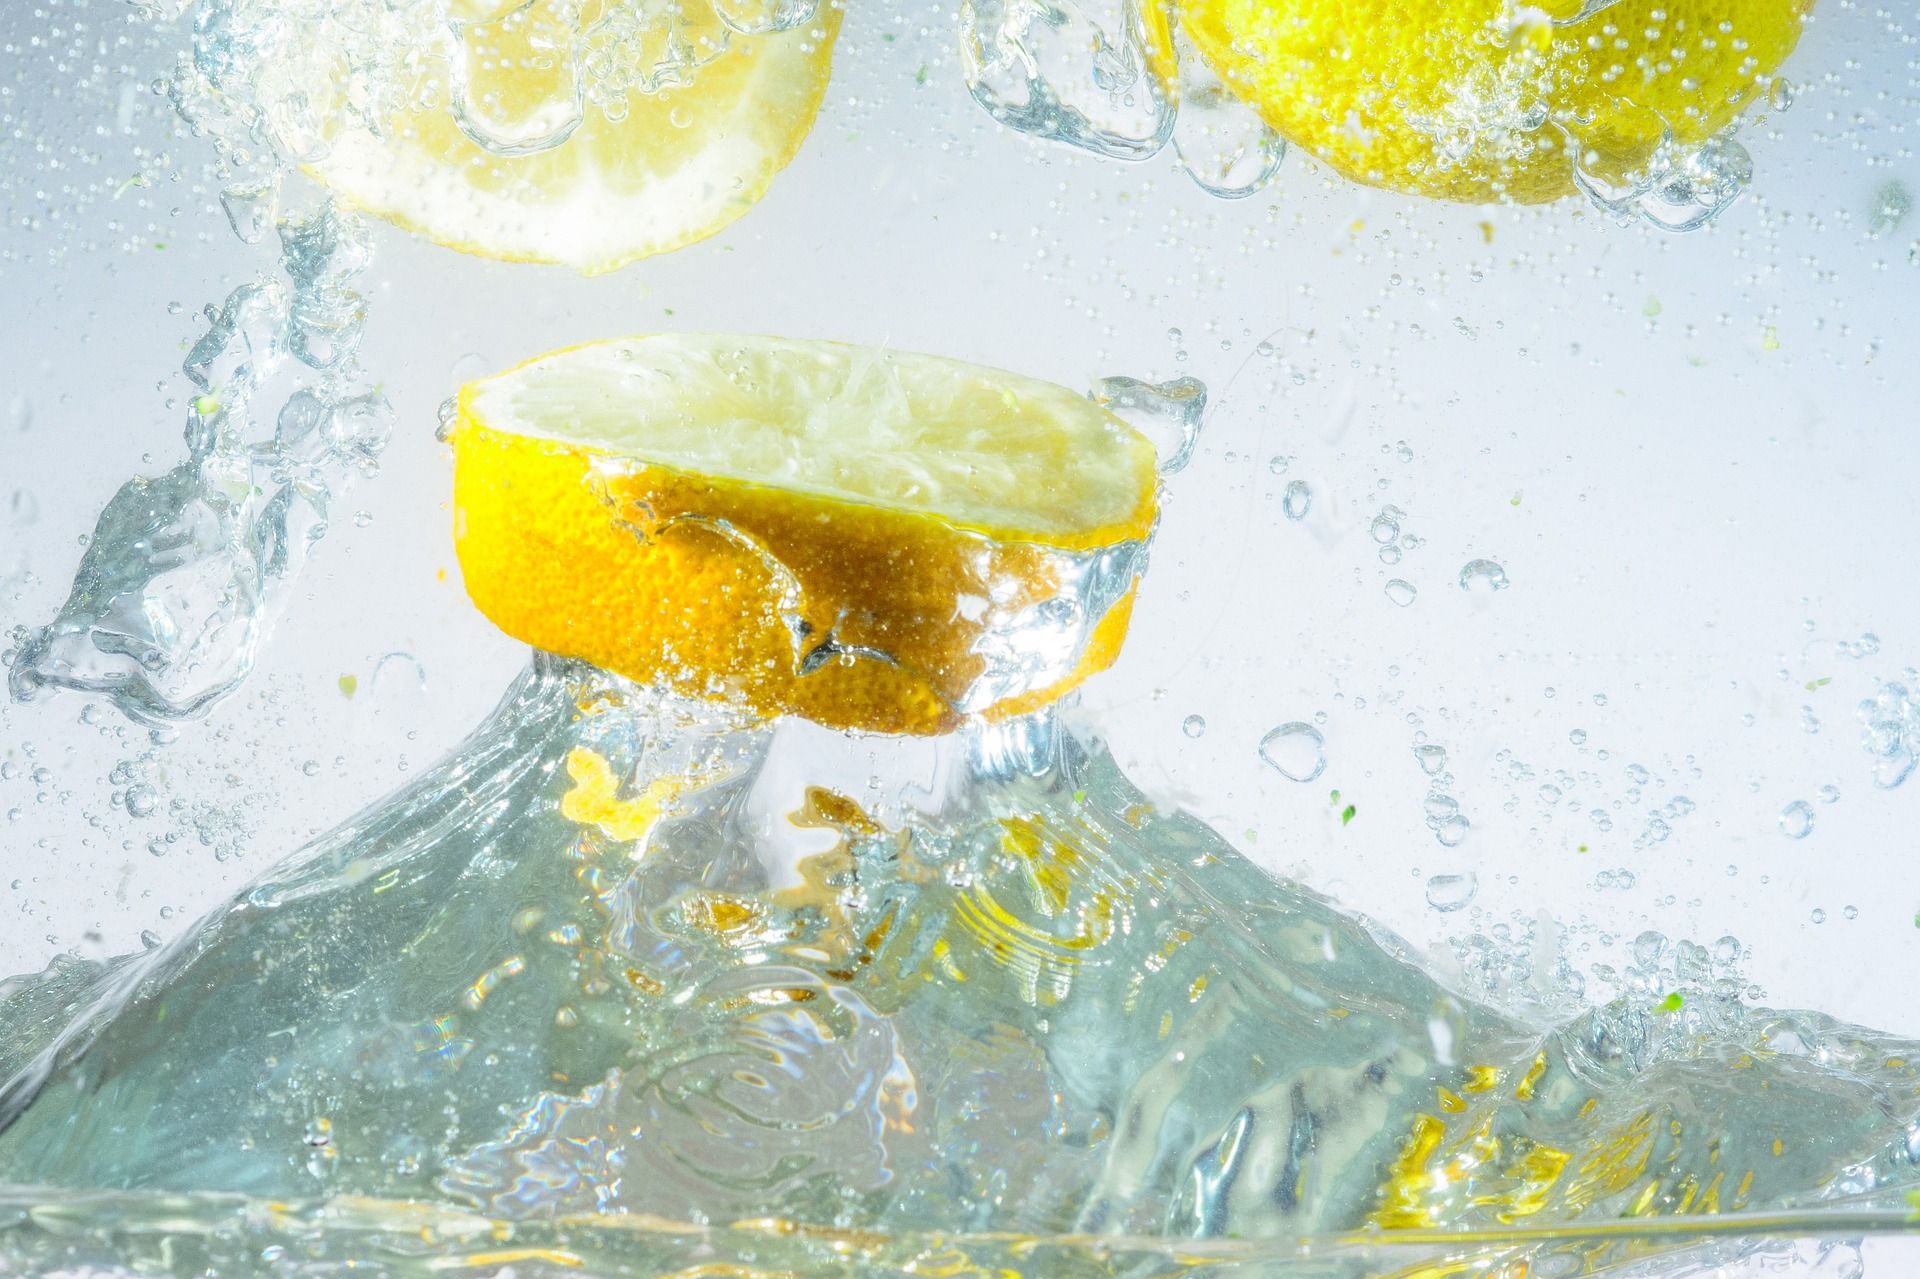 Natural Uses for Lemon